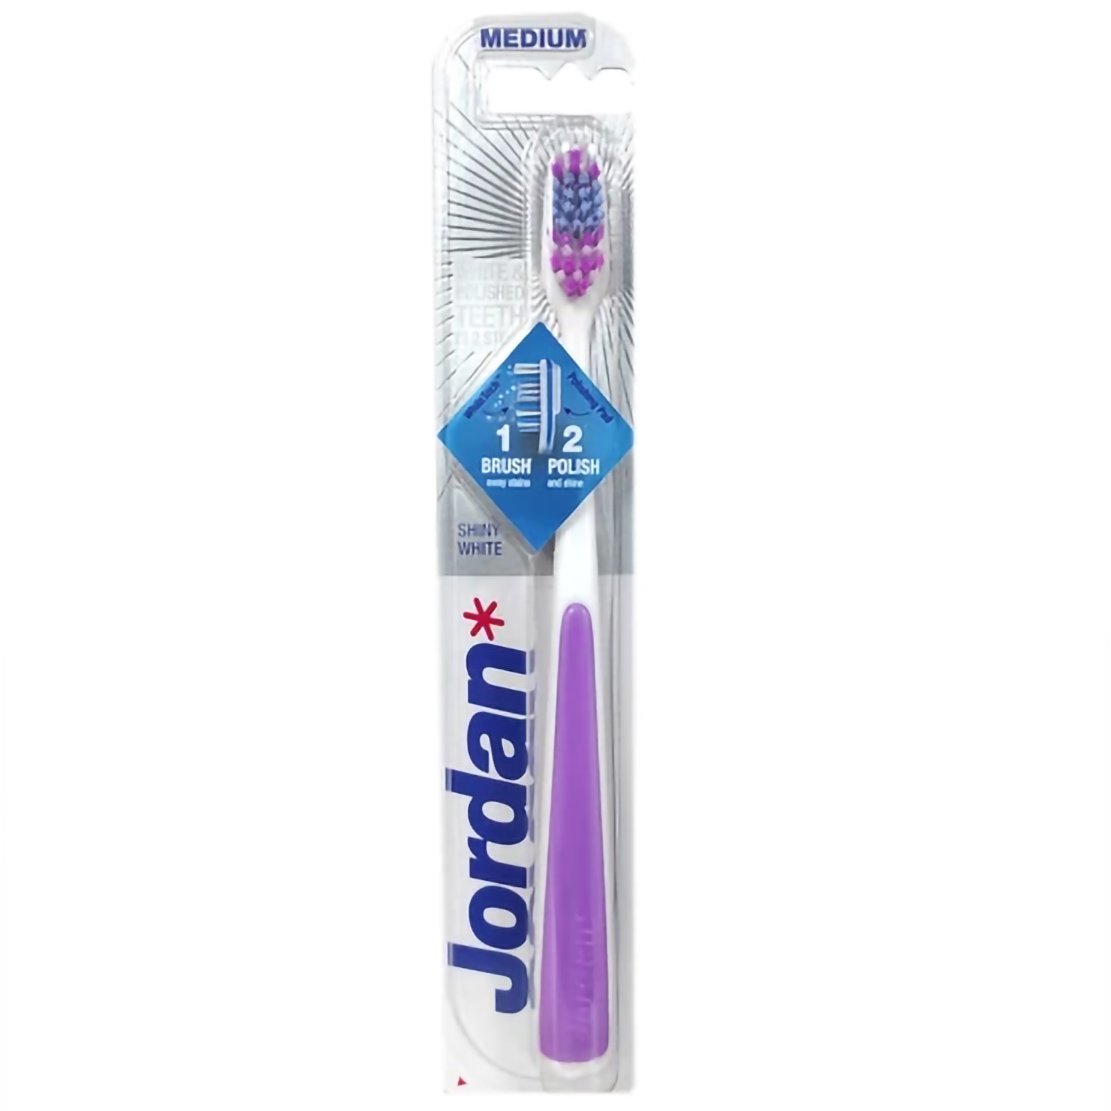 Jordan Shiny White Toothbrush Medium Μέτρια Οδοντόβουρτσα για Βαθύ Καθαρισμό & Λεύκανση 1 Τεμάχιο – Μωβ